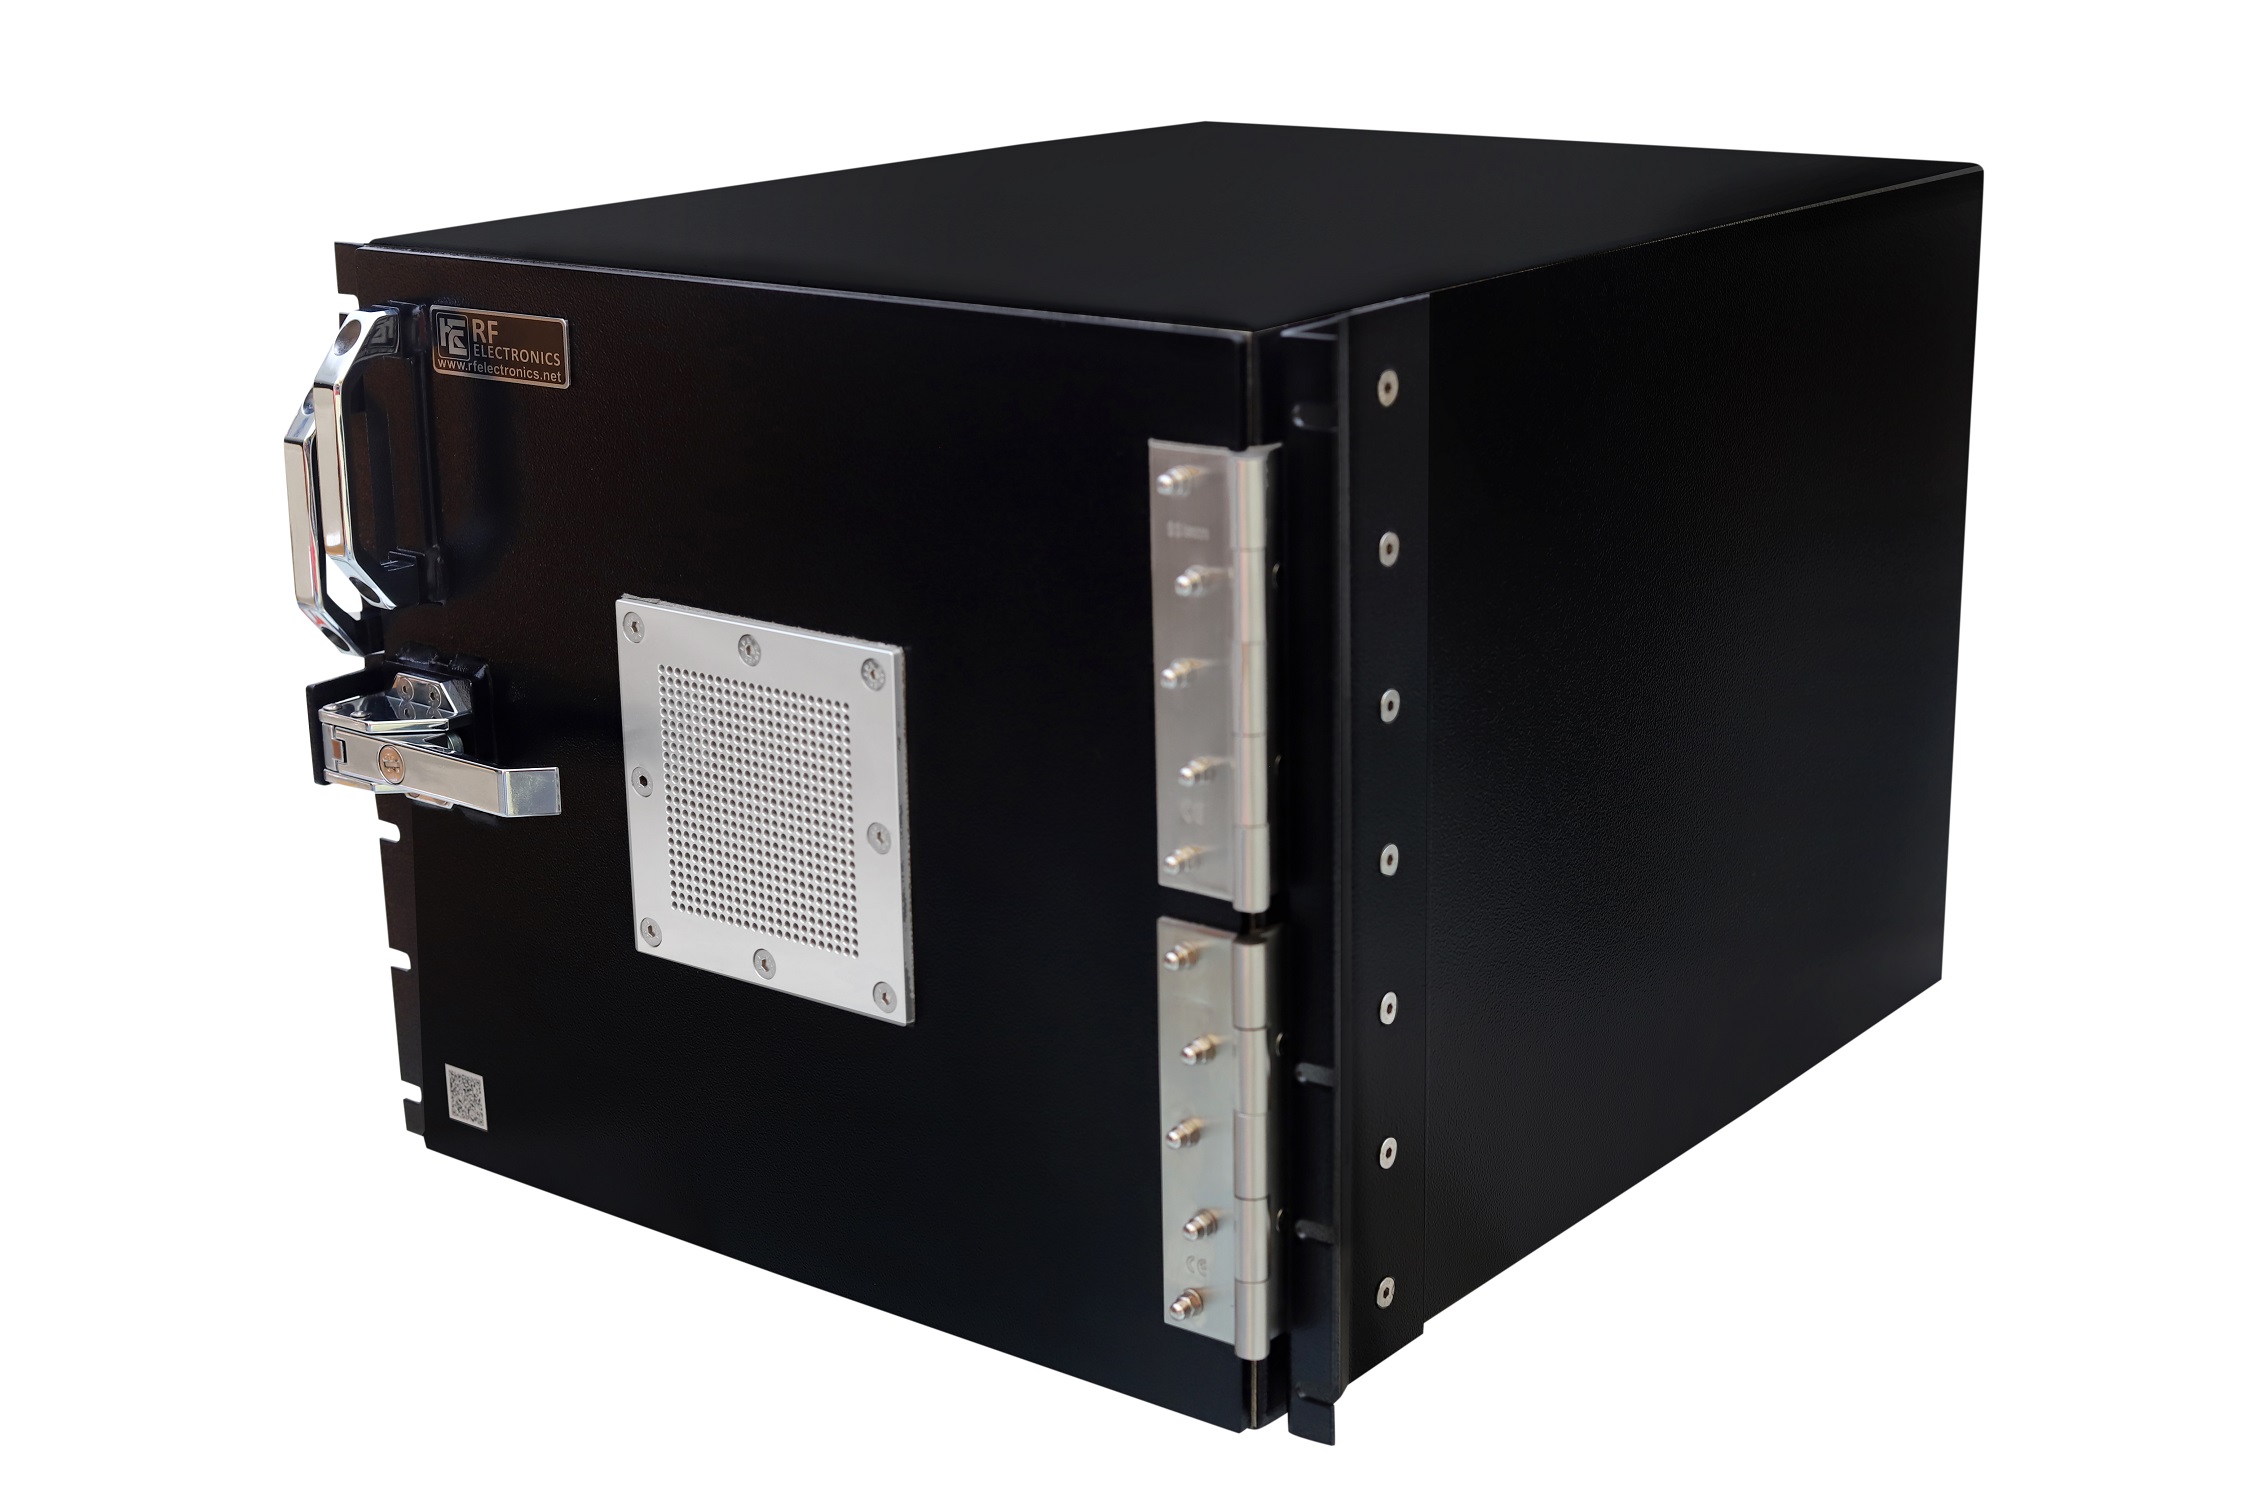 HDRF-1560-R RF Shield Test Box